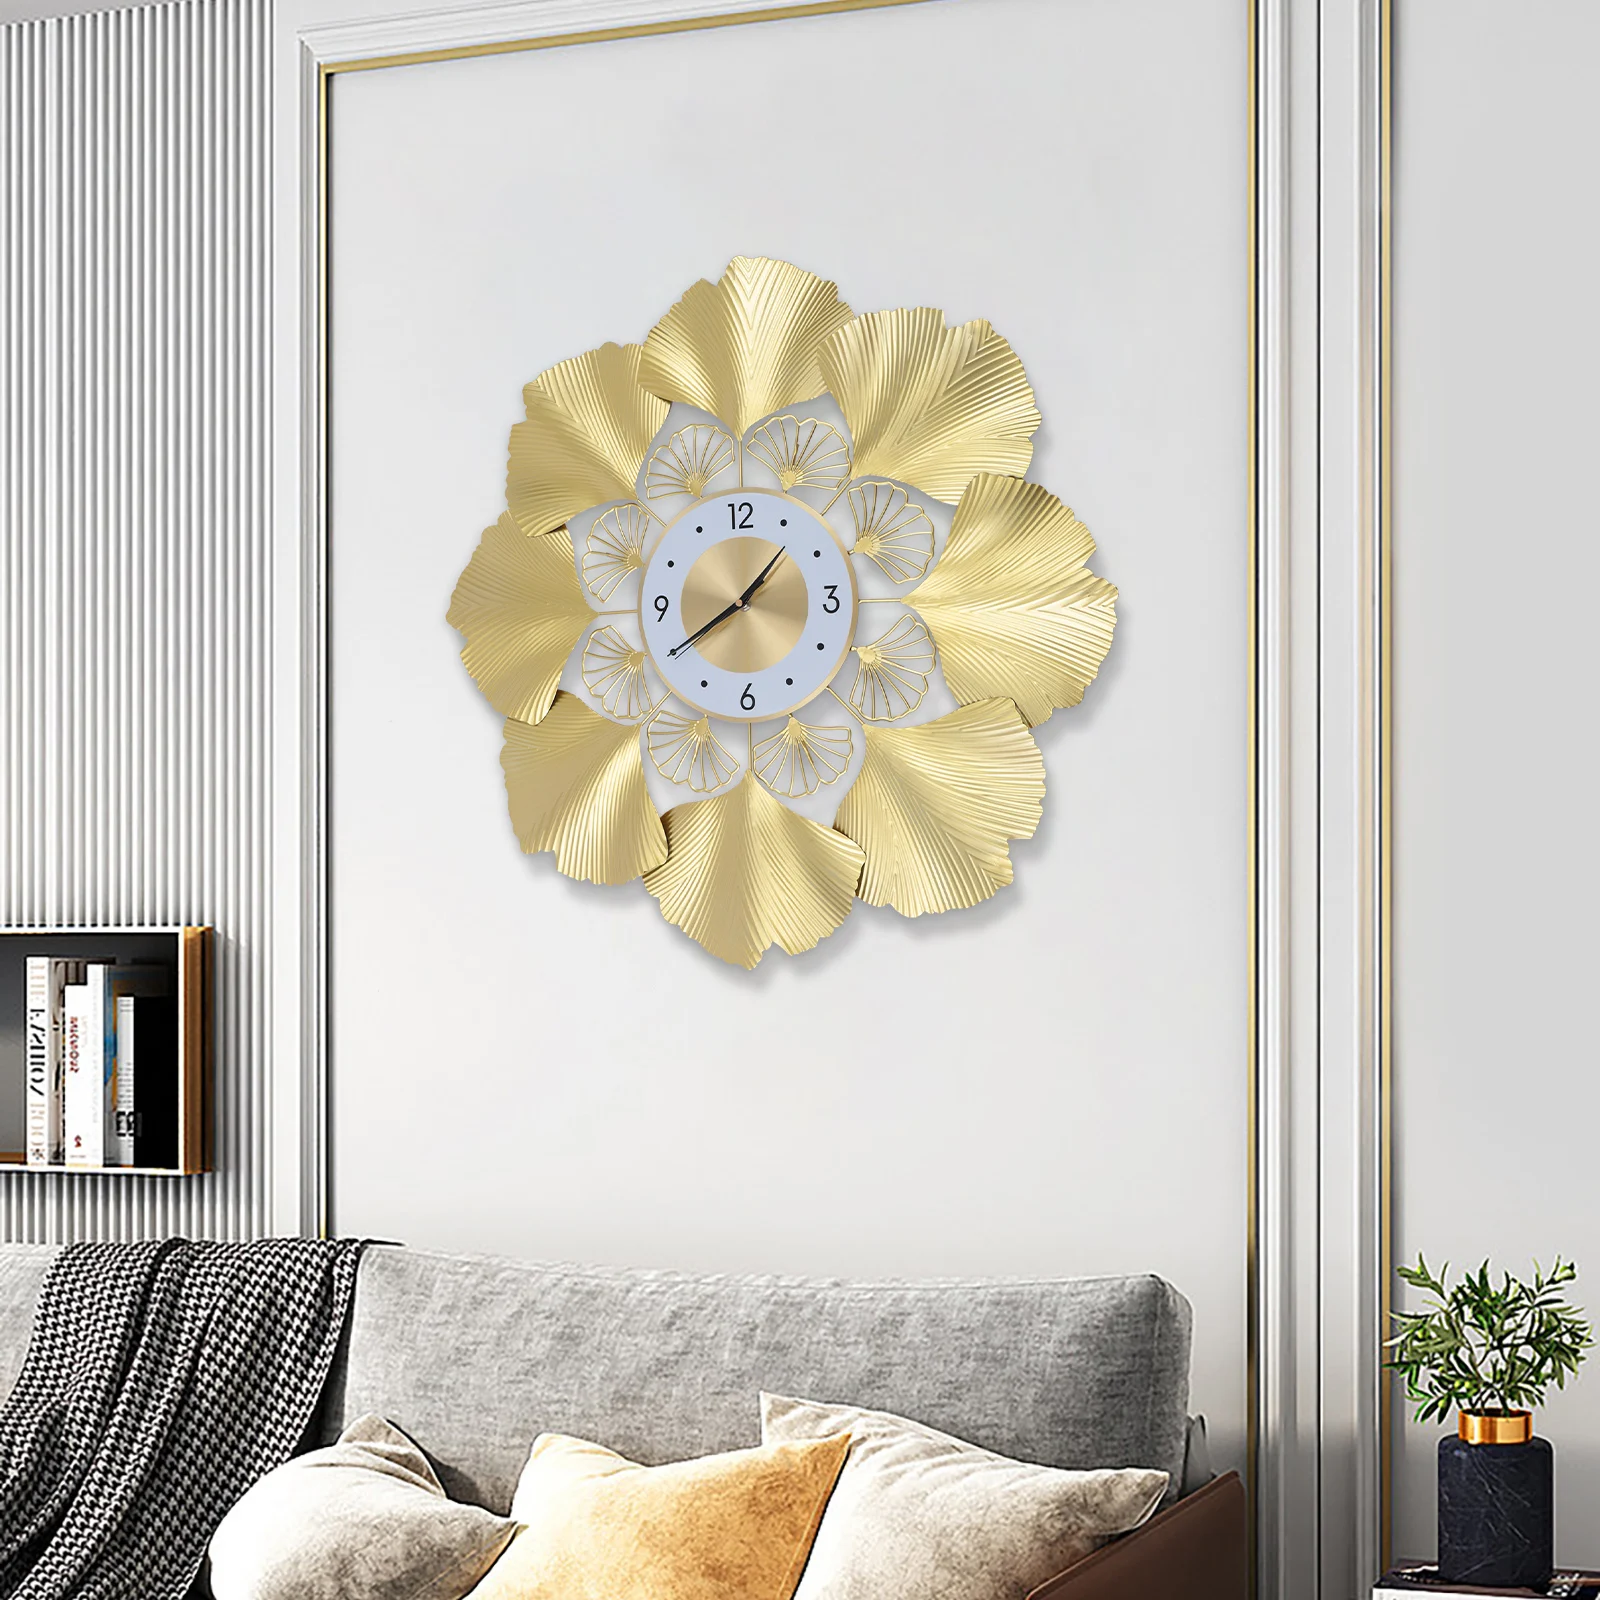 

Ginkgo Biloba Wall Clock 3D Creative ginkgo biloba wall clock Gold Dial Design Silent Sweep Seconds Movement Digital Display